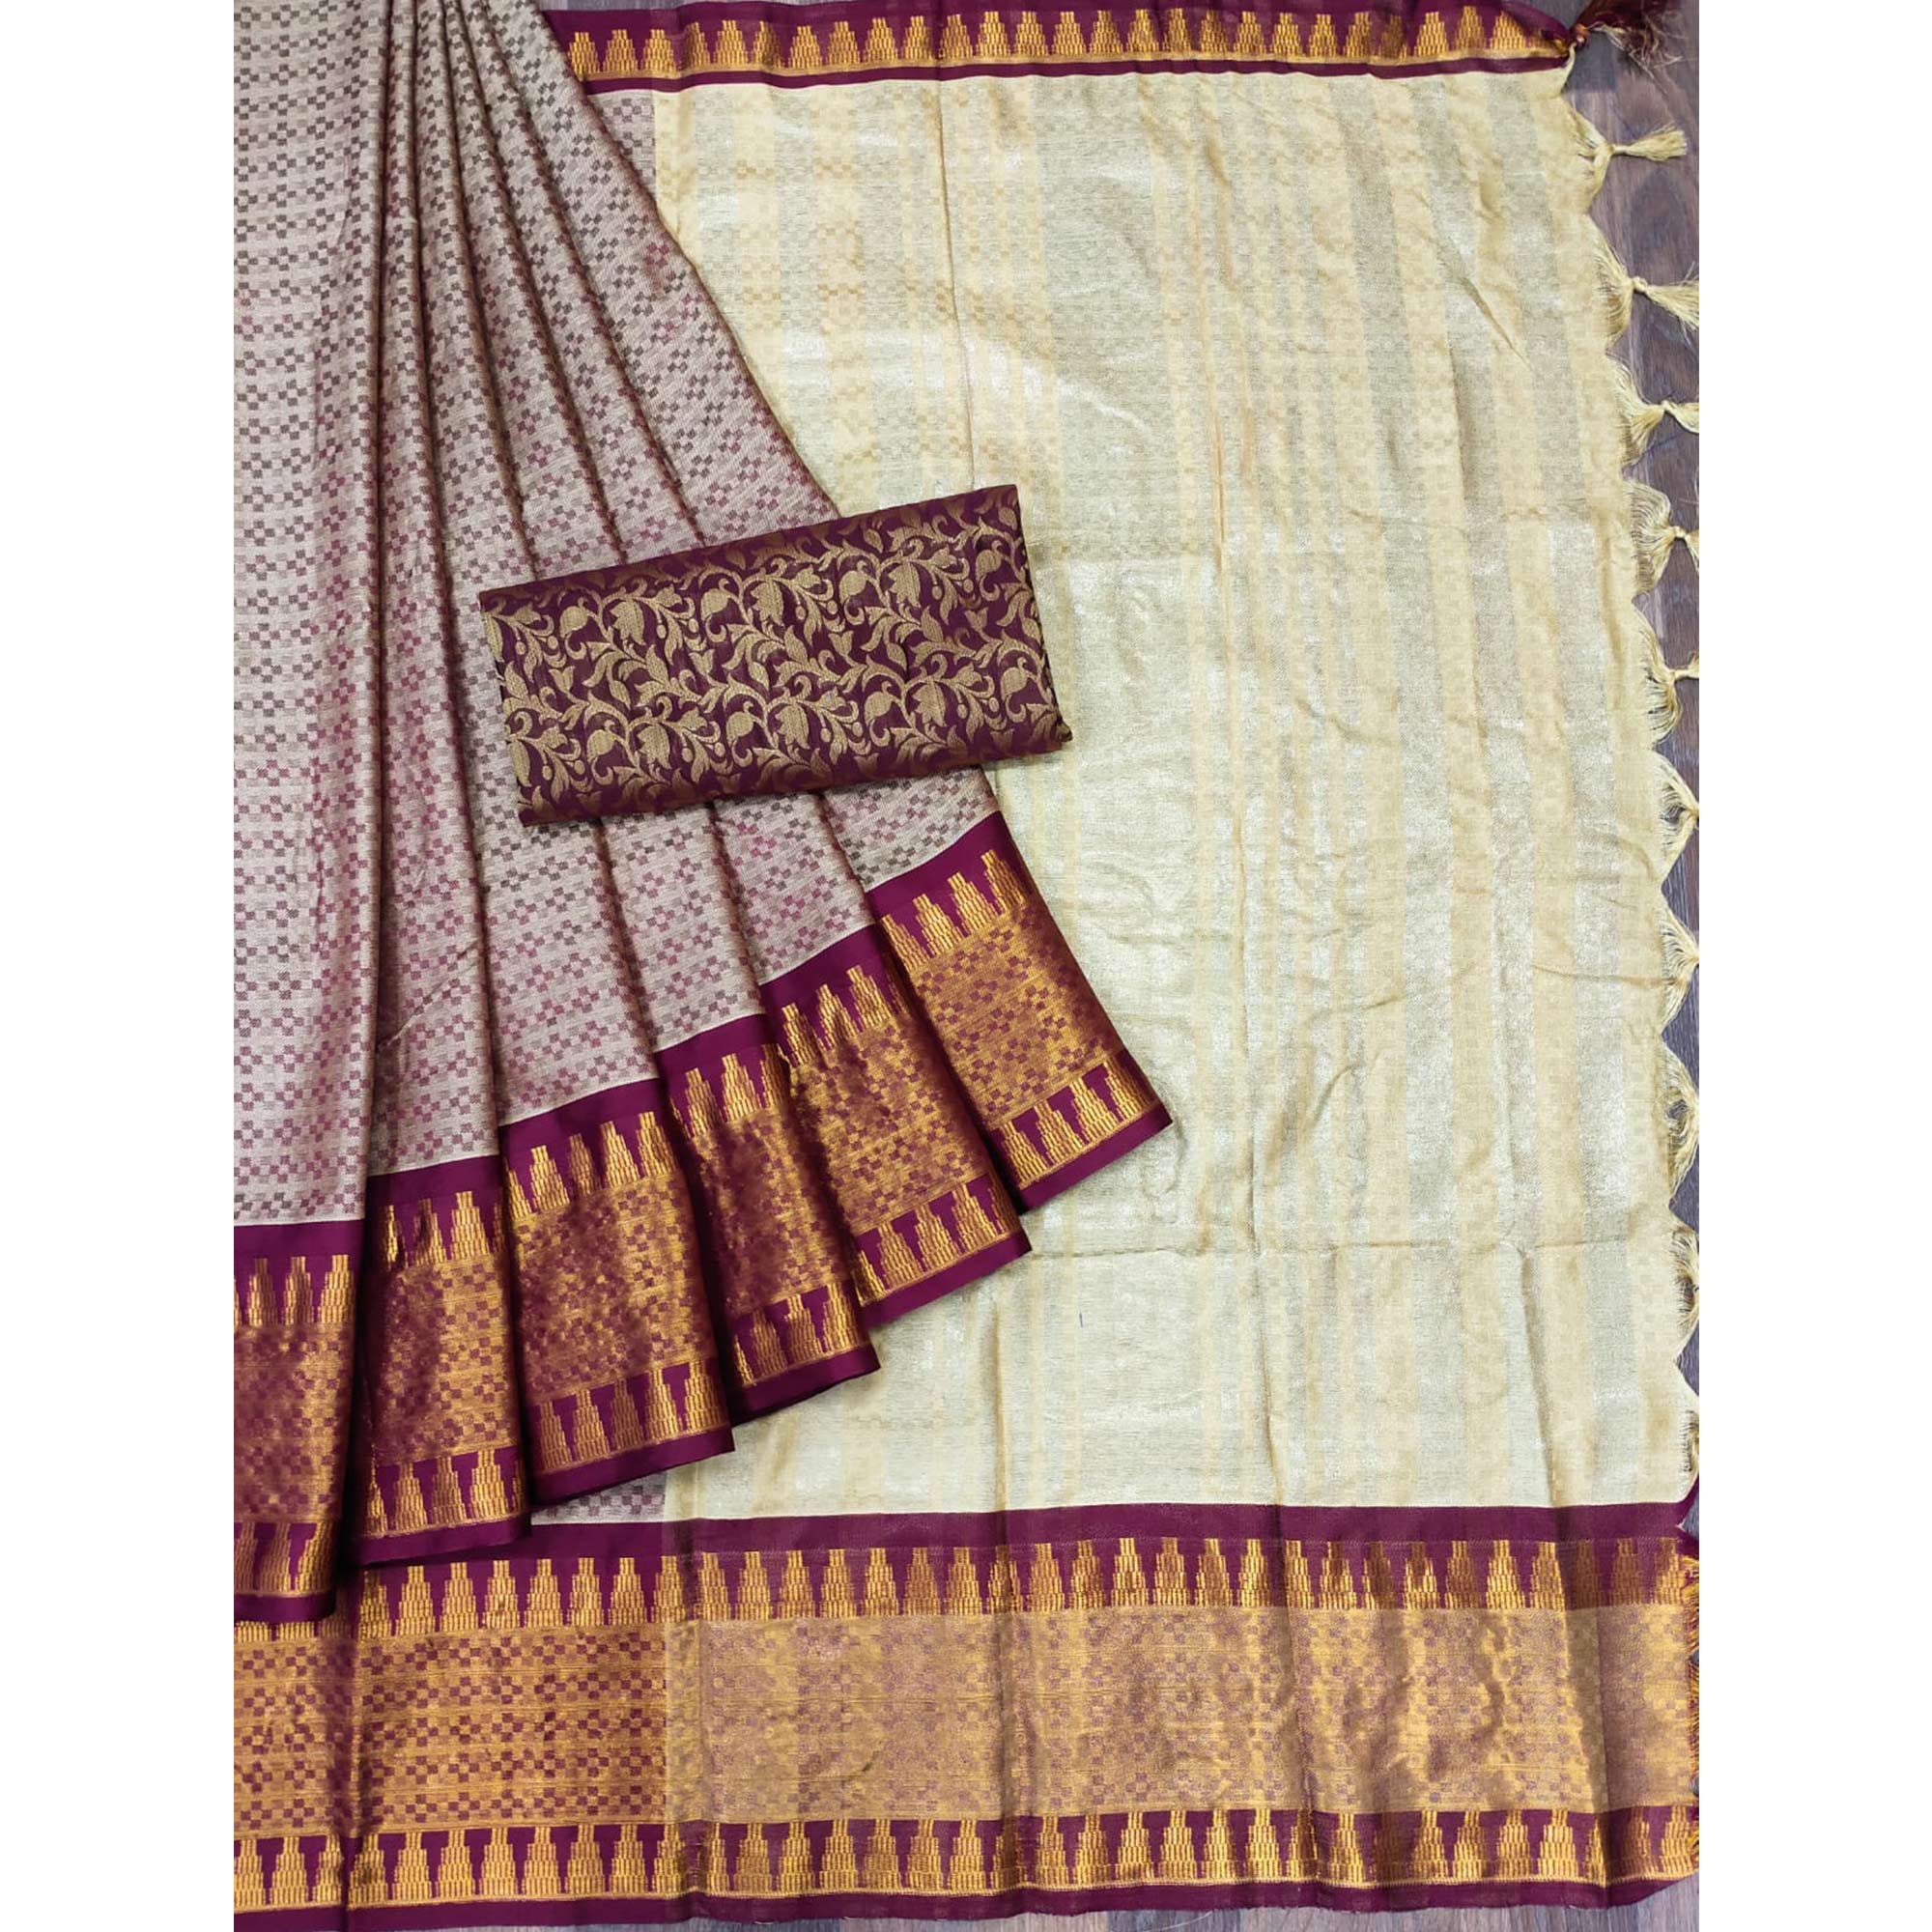 Chikoo Woven Cotton Silk Saree With Tassels